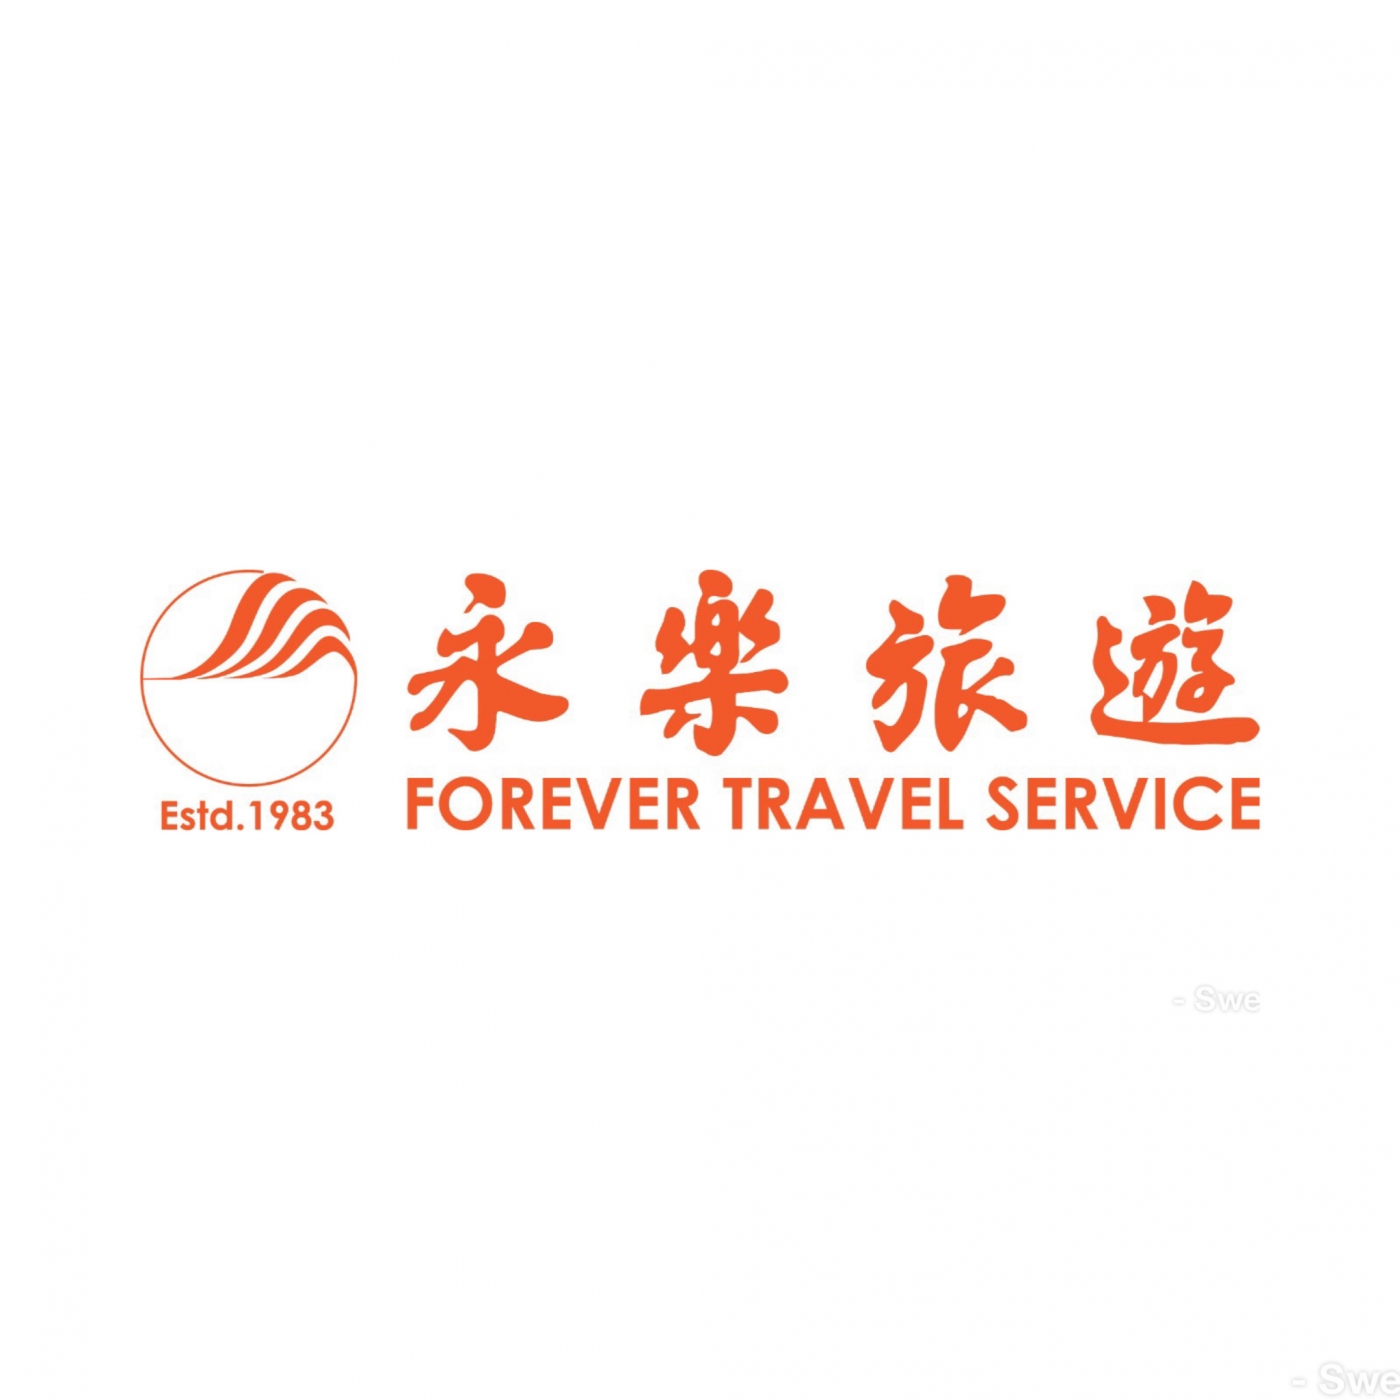 forever travel service photos